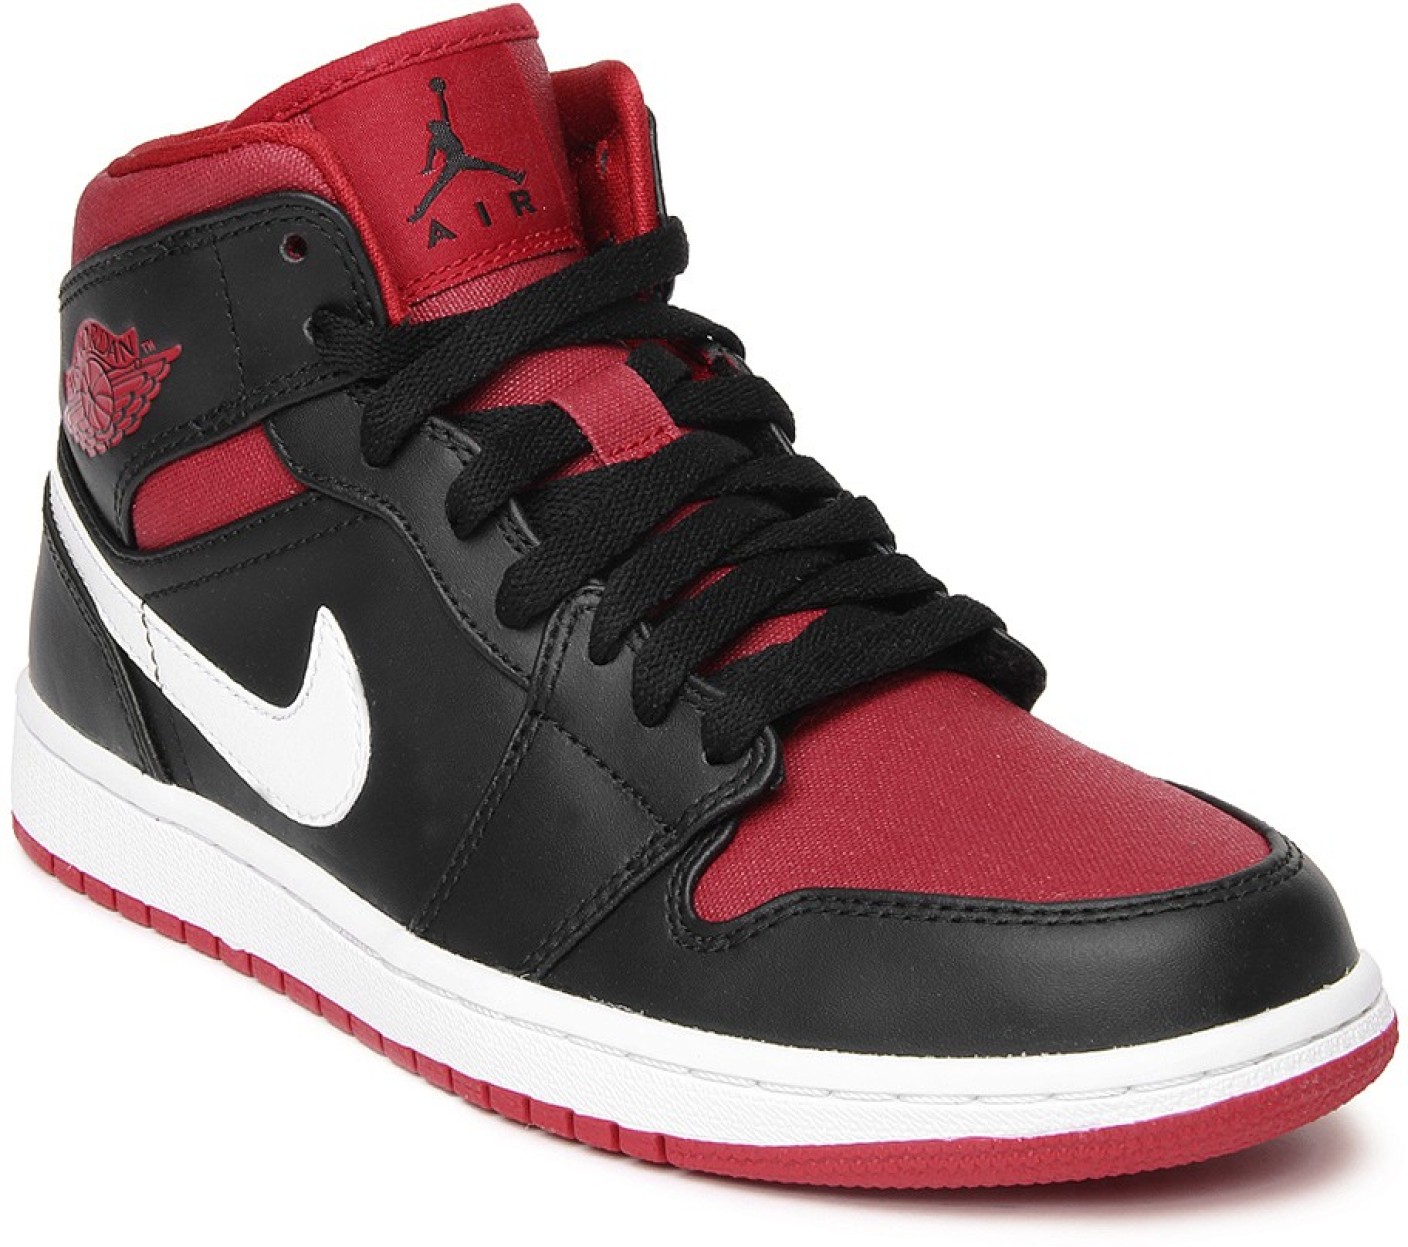 Nike Air Jordan 1 Mid Basketball Shoes For Men - Buy BLACK/GYM RED